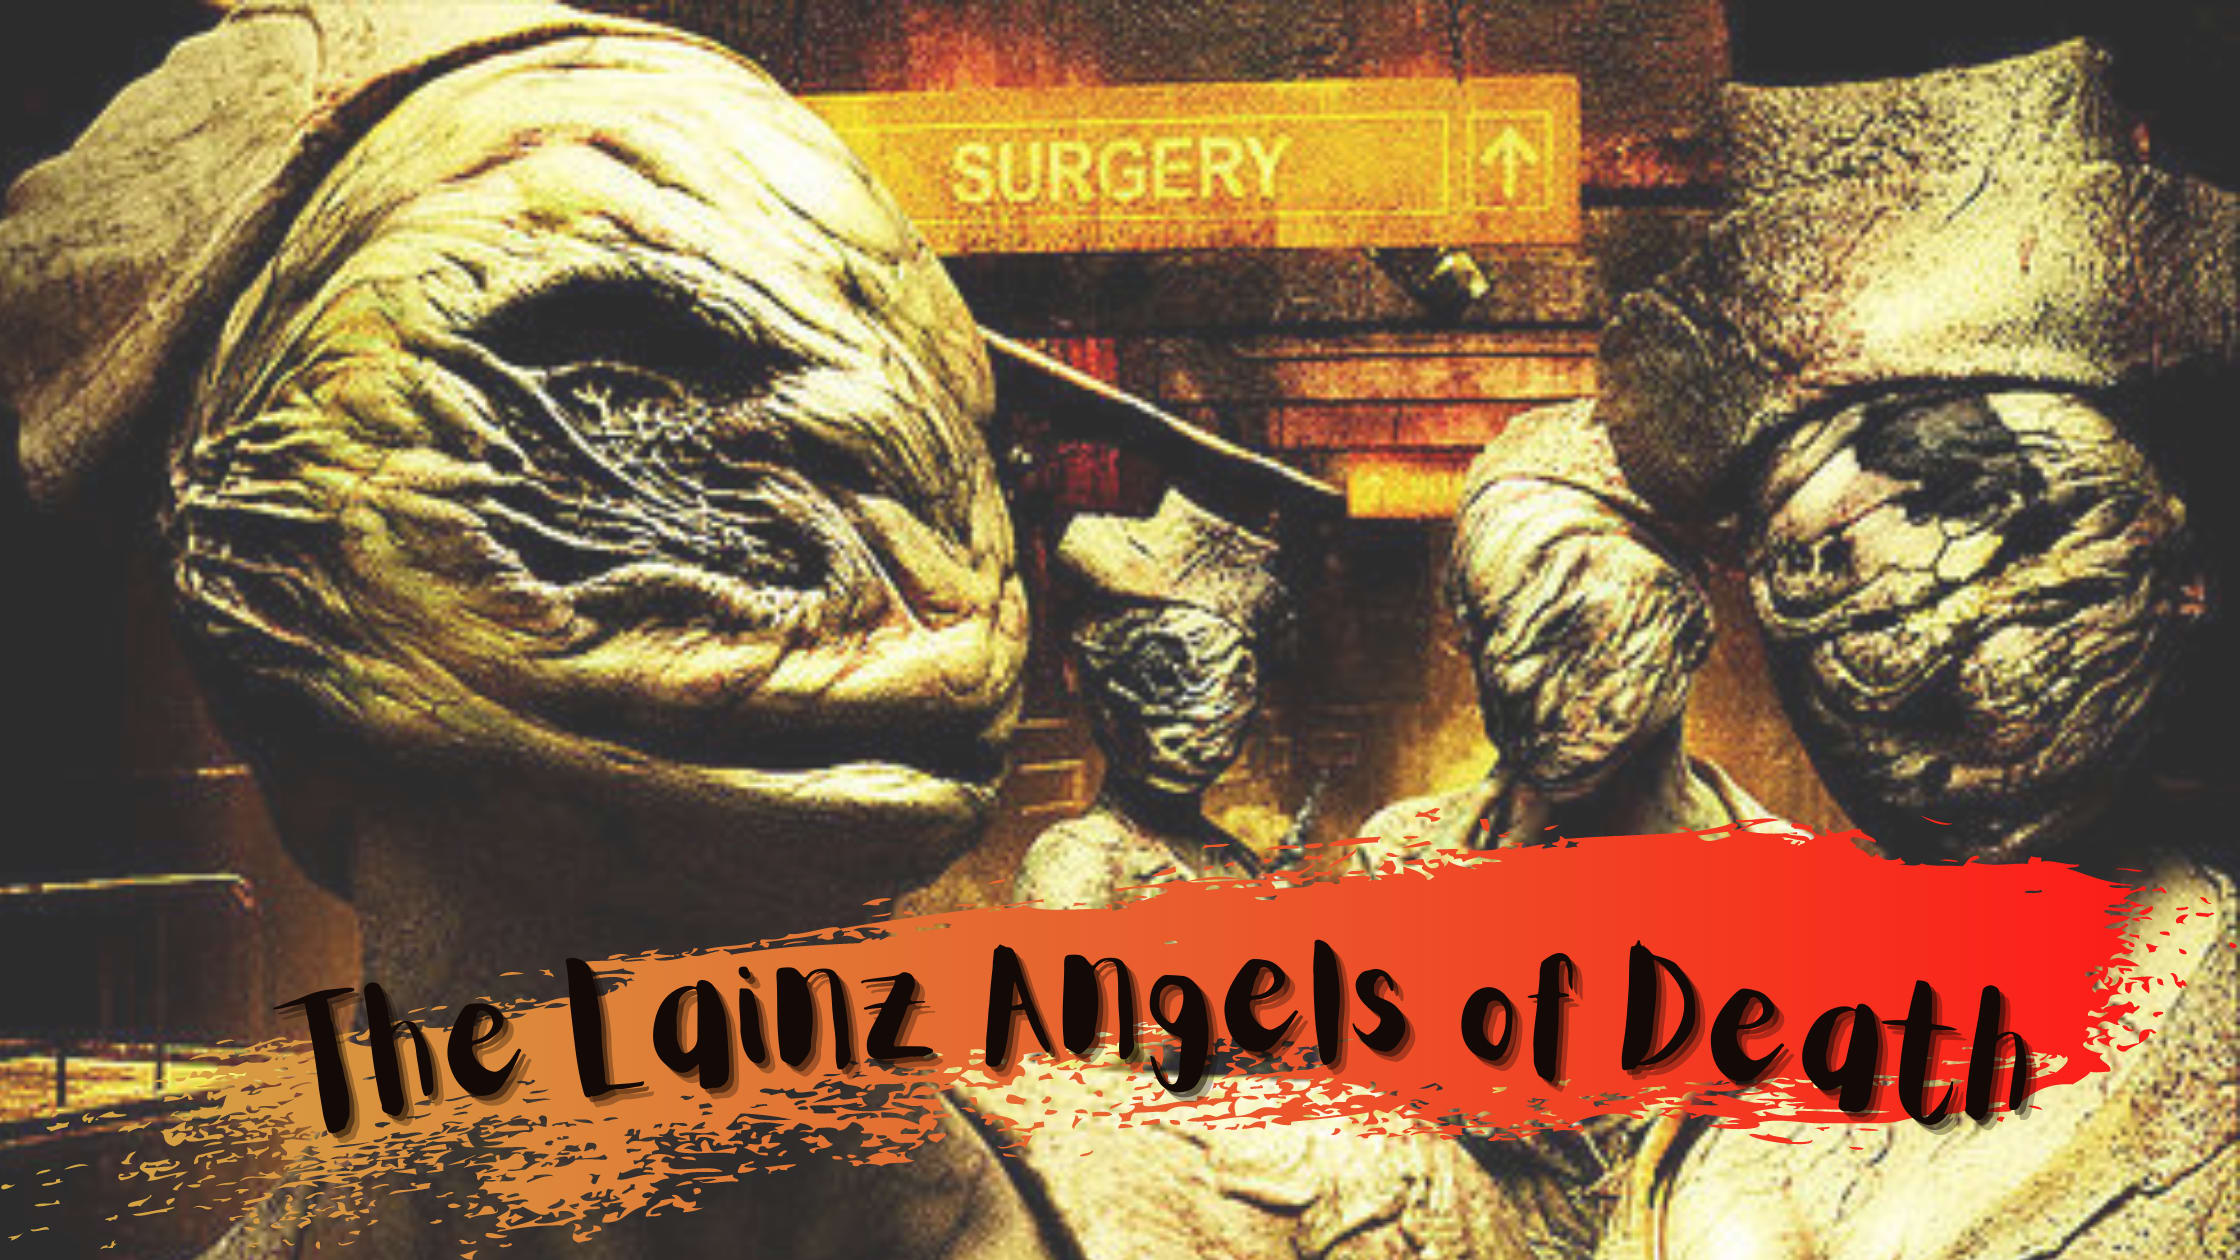 Lainz Angels of Death – Corr Blimey